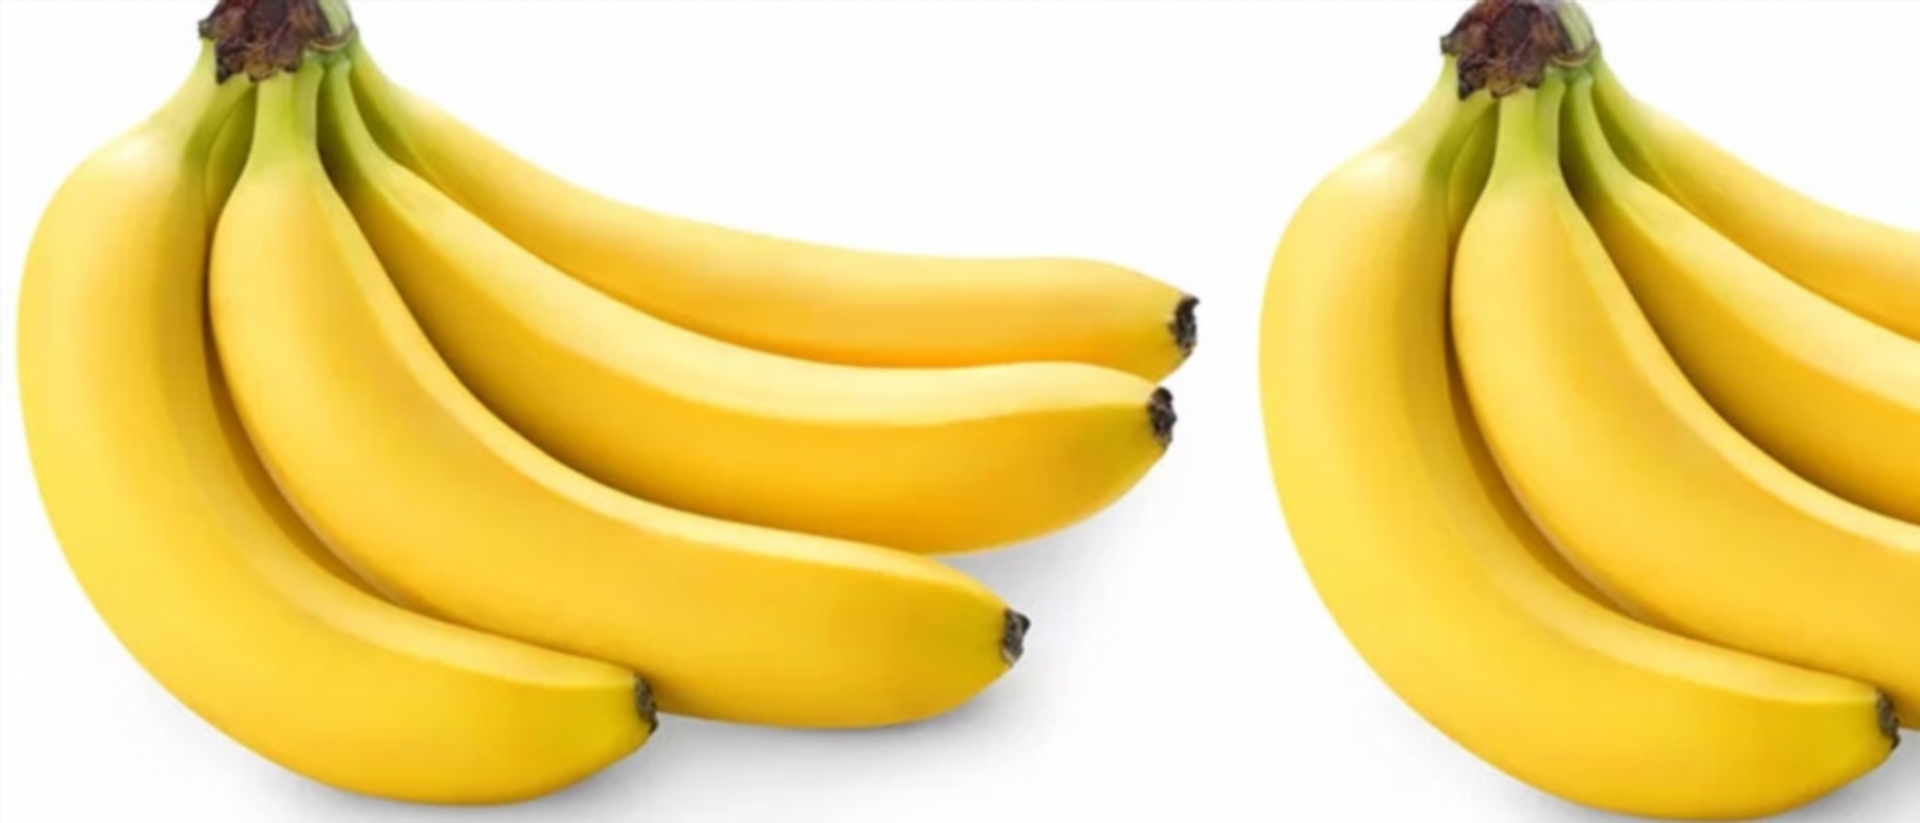 banana during pregnancy guide